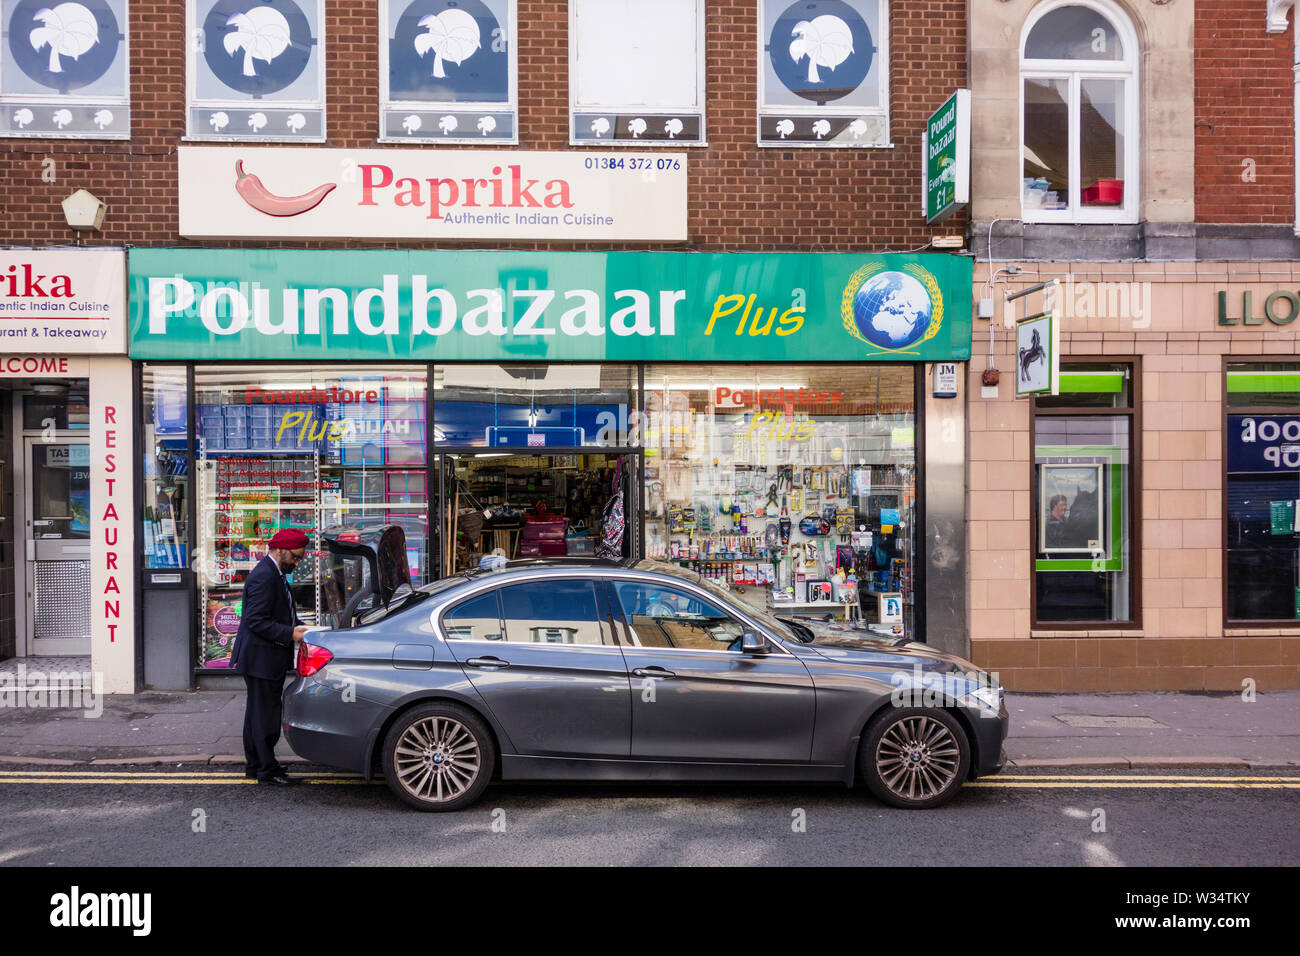 Poundbazaar Plus Store, Stourbridge, West Midlands, UK Stock Photo